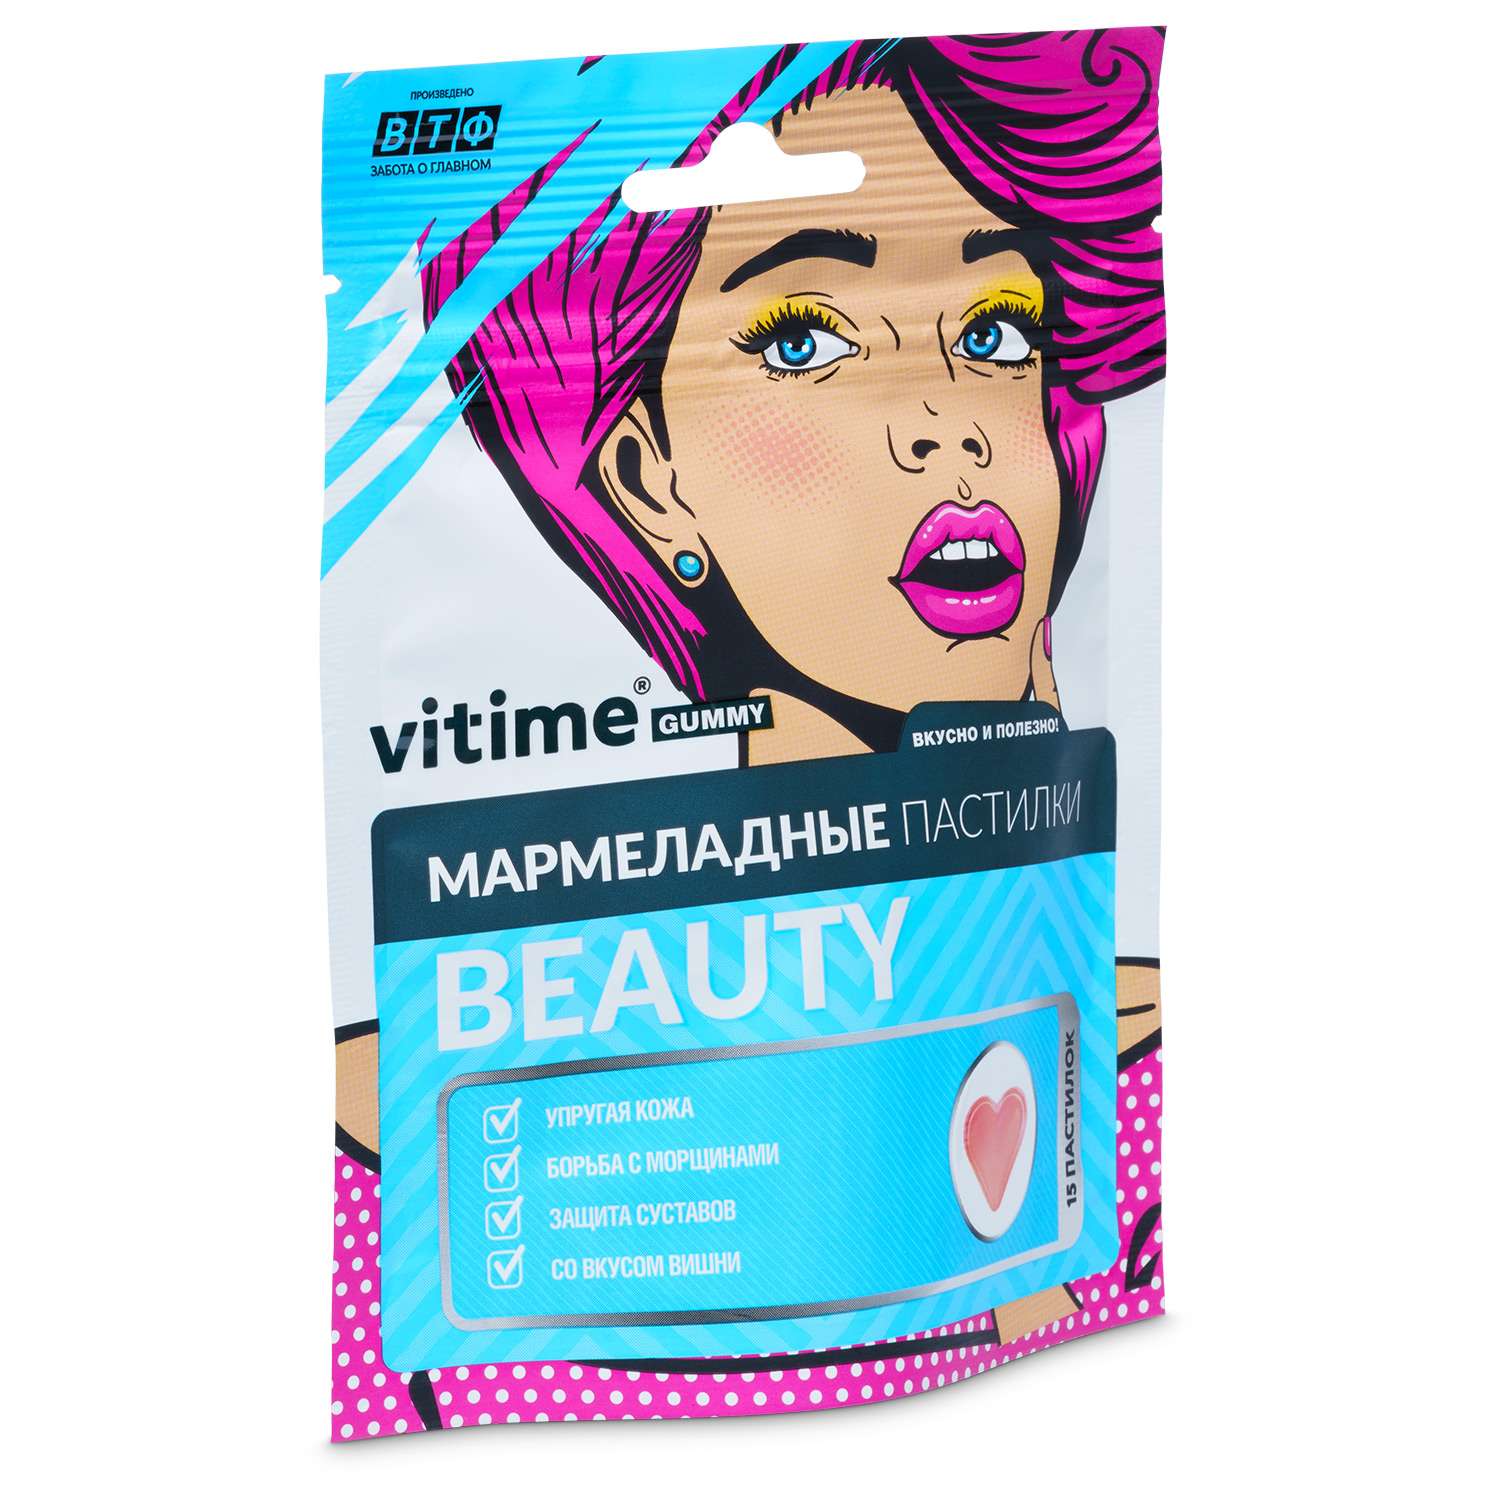 Биологически активная добавка Vitime Gummy Beauty мармеладные со вкусом вишни 15пастилок - фото 2